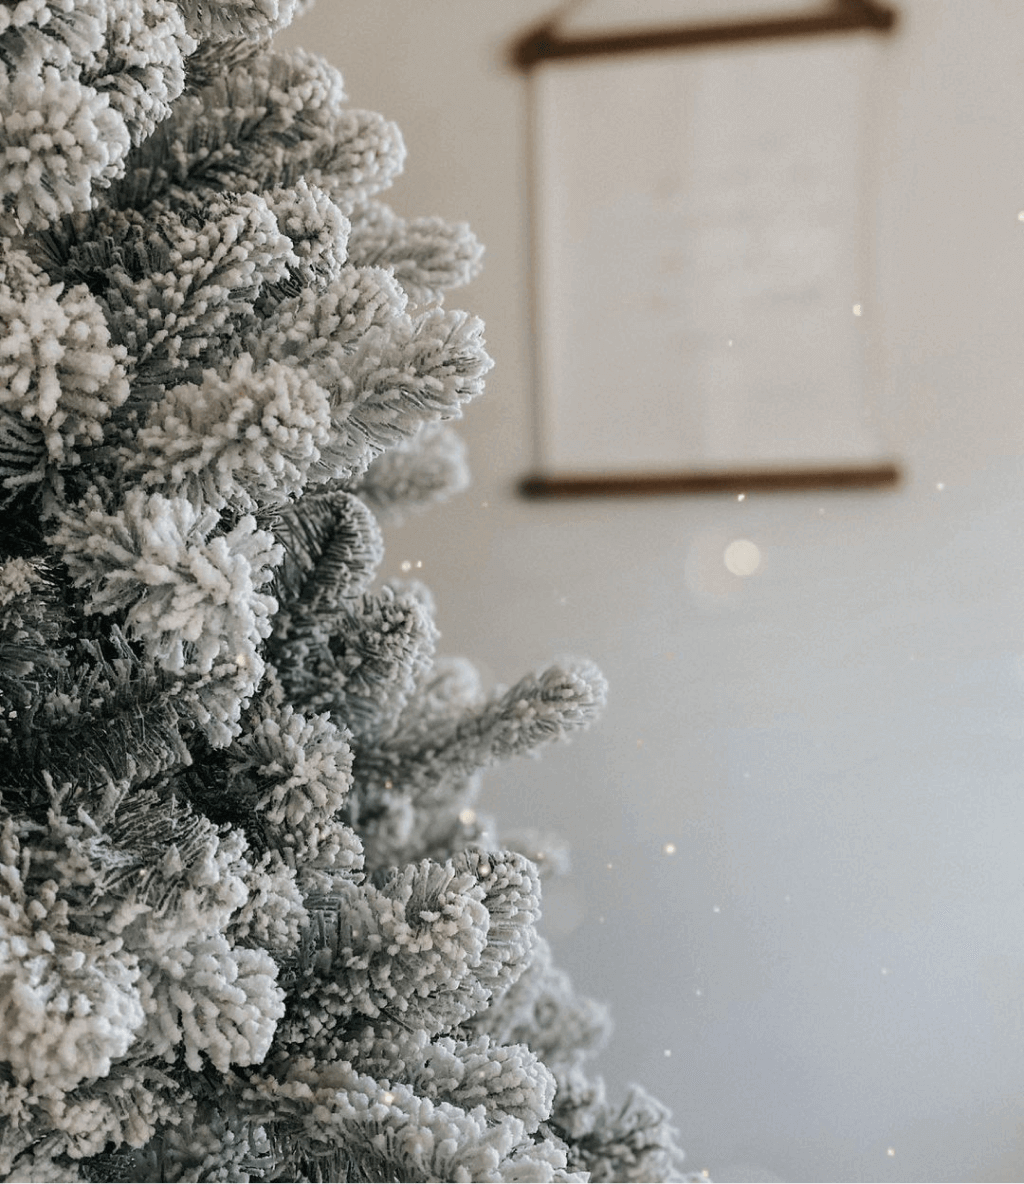 King of Christmas 12' King Flock® Slim Quick-Shape Artificial Christmas Tree Unlit